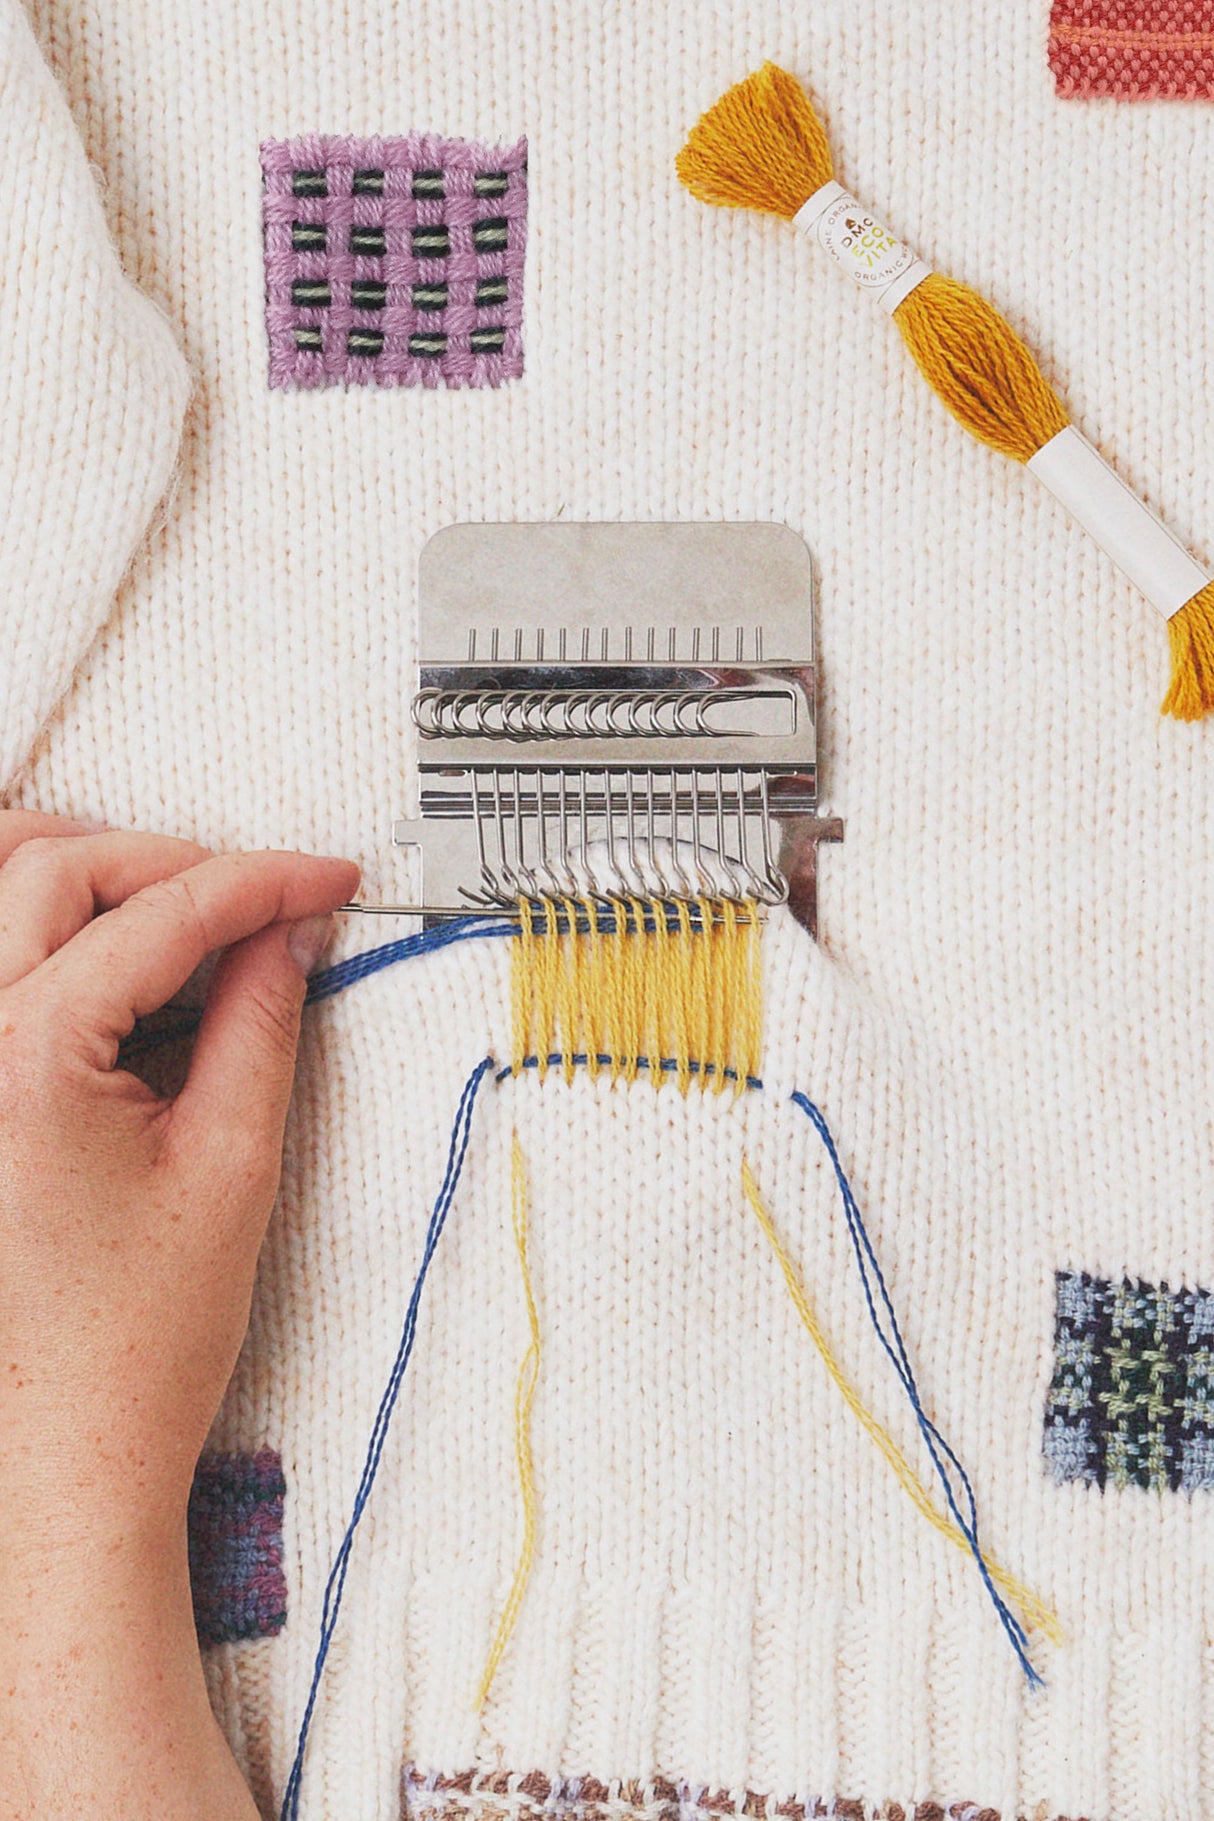 DMC Weaving Kit: 14 Hook Mini Loom for Creativity and Sustainable Repairs